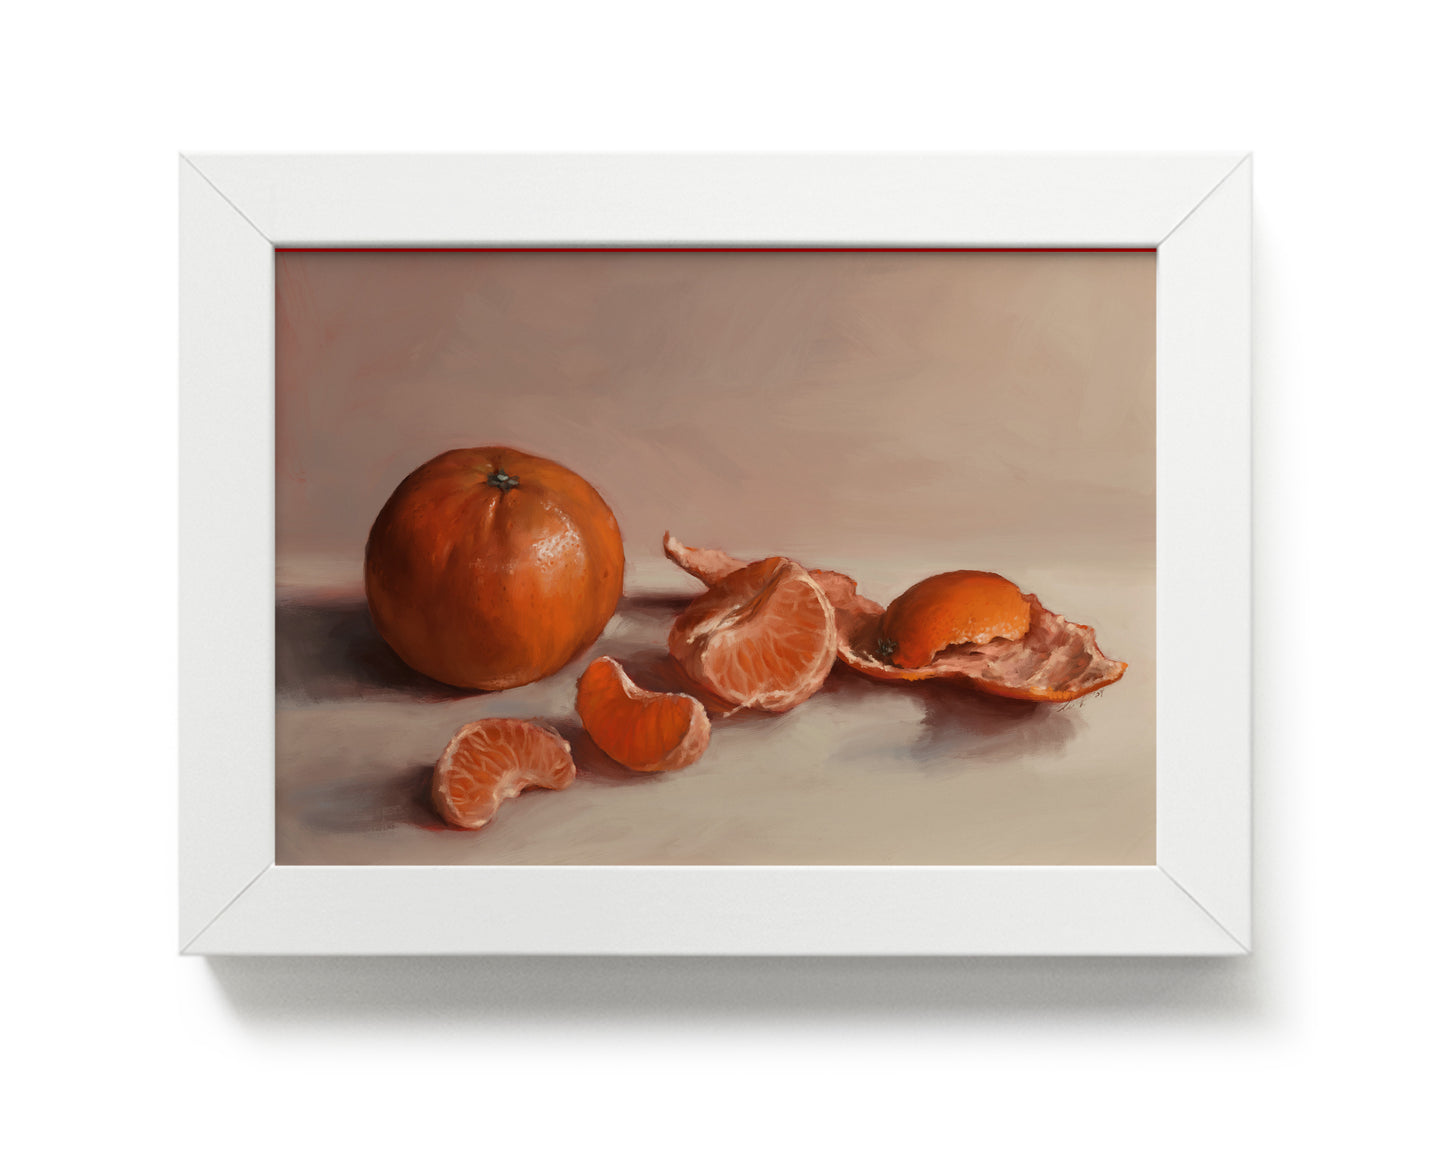 "Clementines" by Catherine Hébert - Clementine Orange Still Life Art Print - 5"x7" size